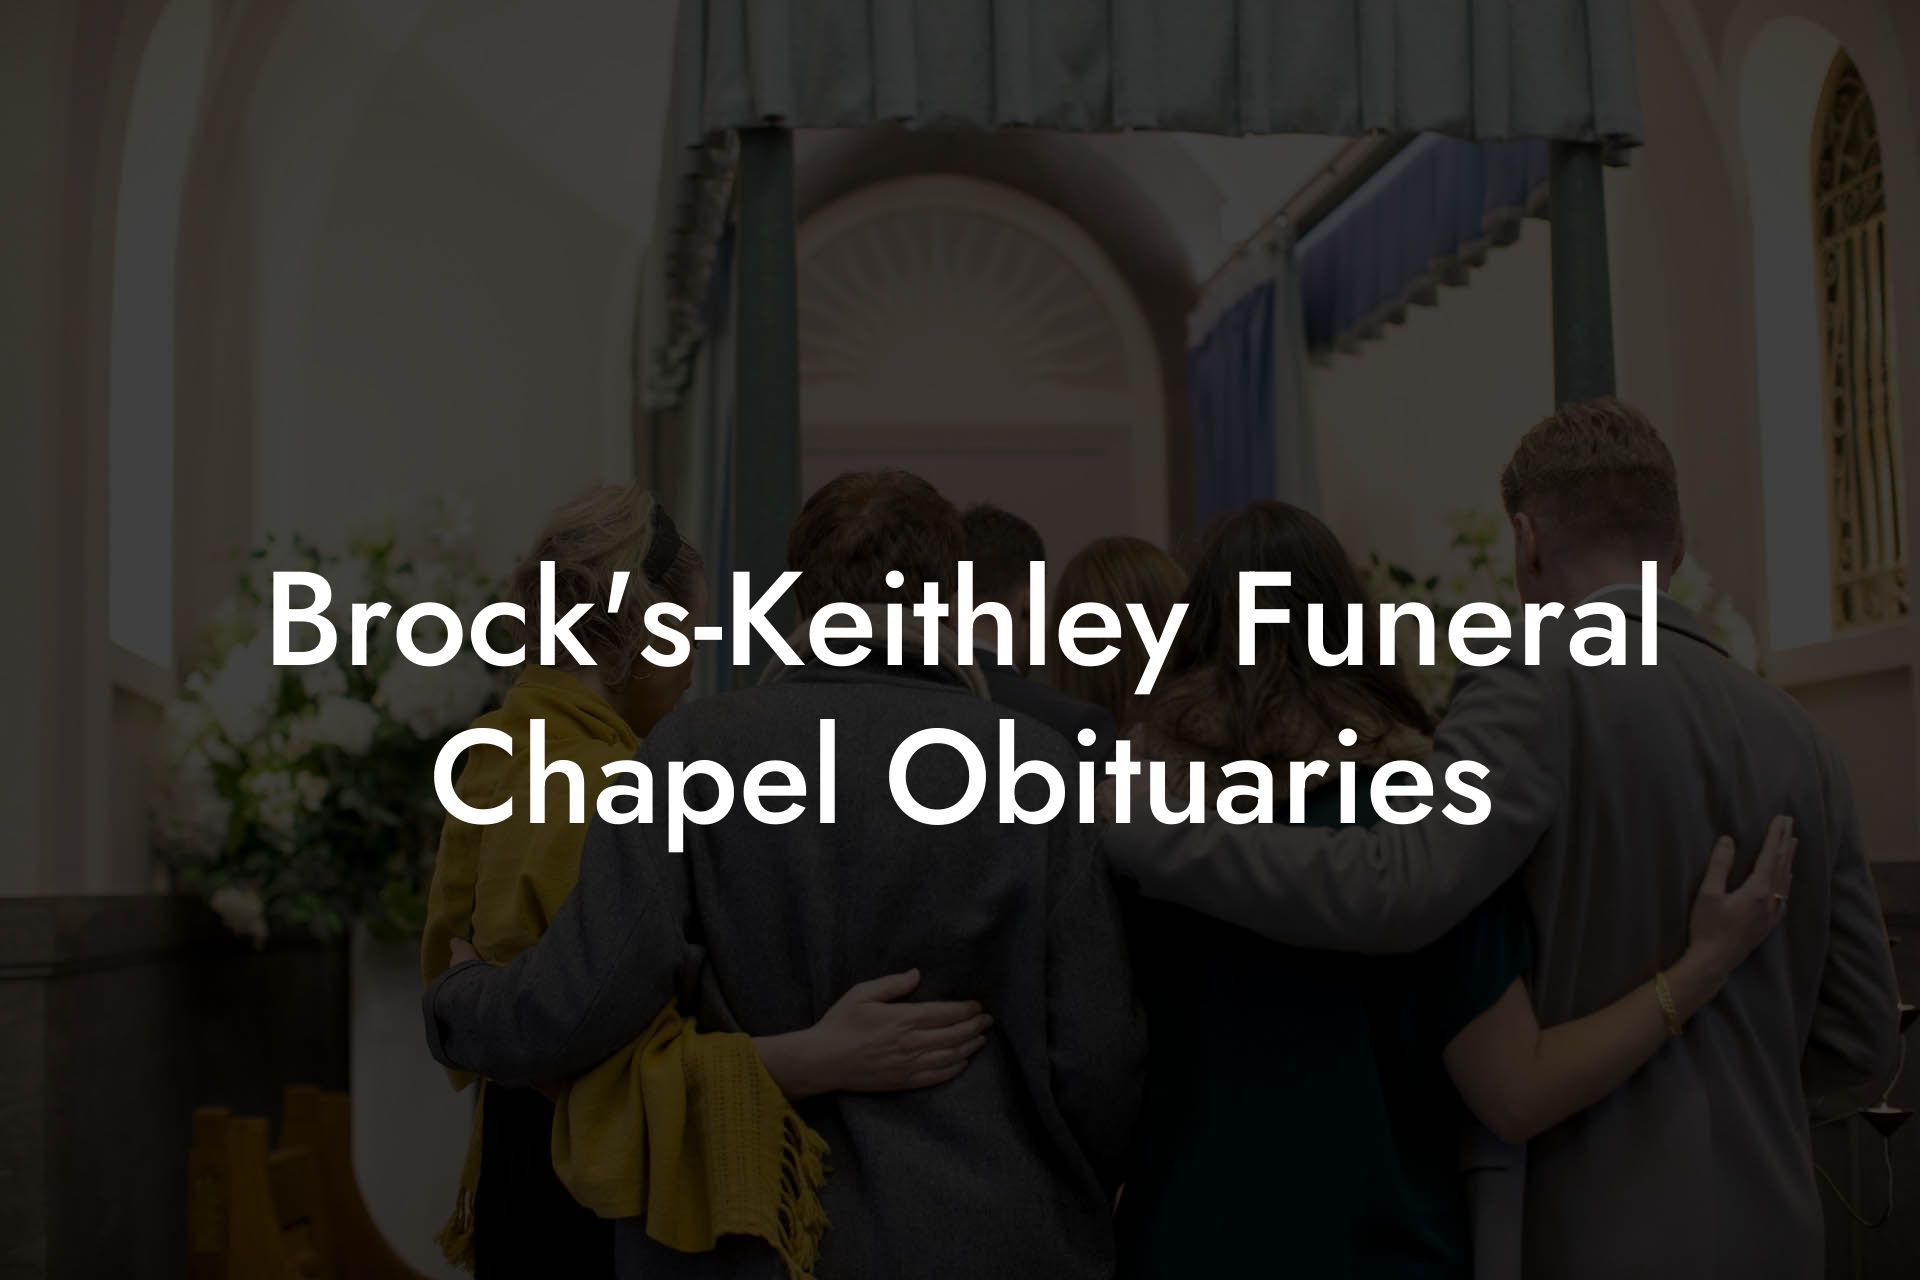 Brock's-Keithley Funeral Chapel Obituaries